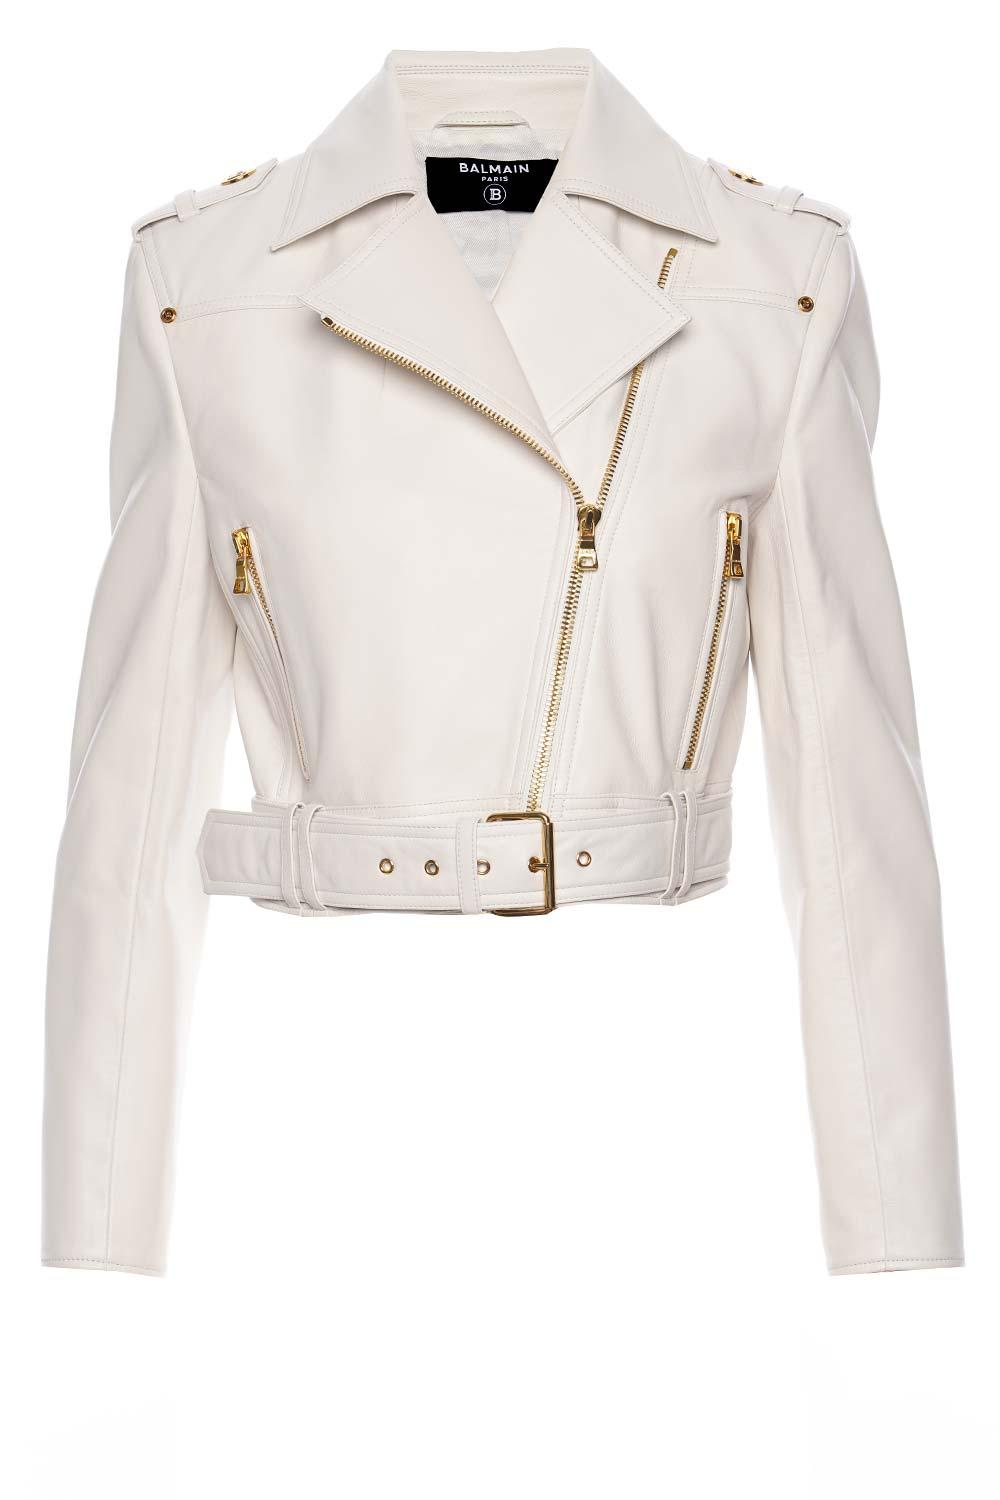 Balmain White Belted Leather Cropped Biker Jacket